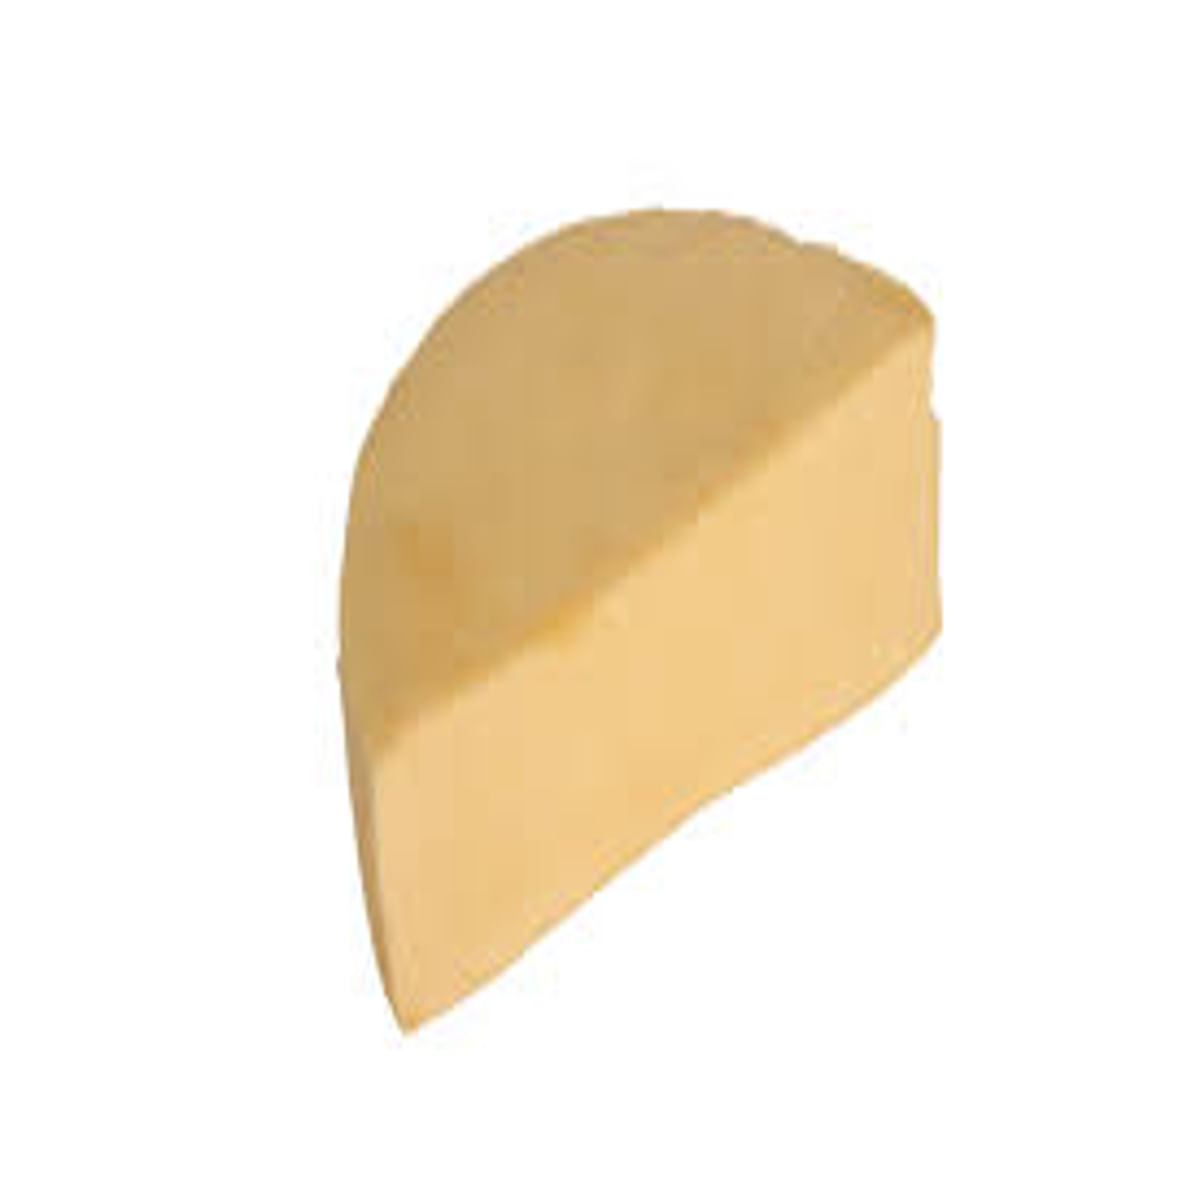 queijo-minas-meia-cura-frac-ls-kg-1.jpg